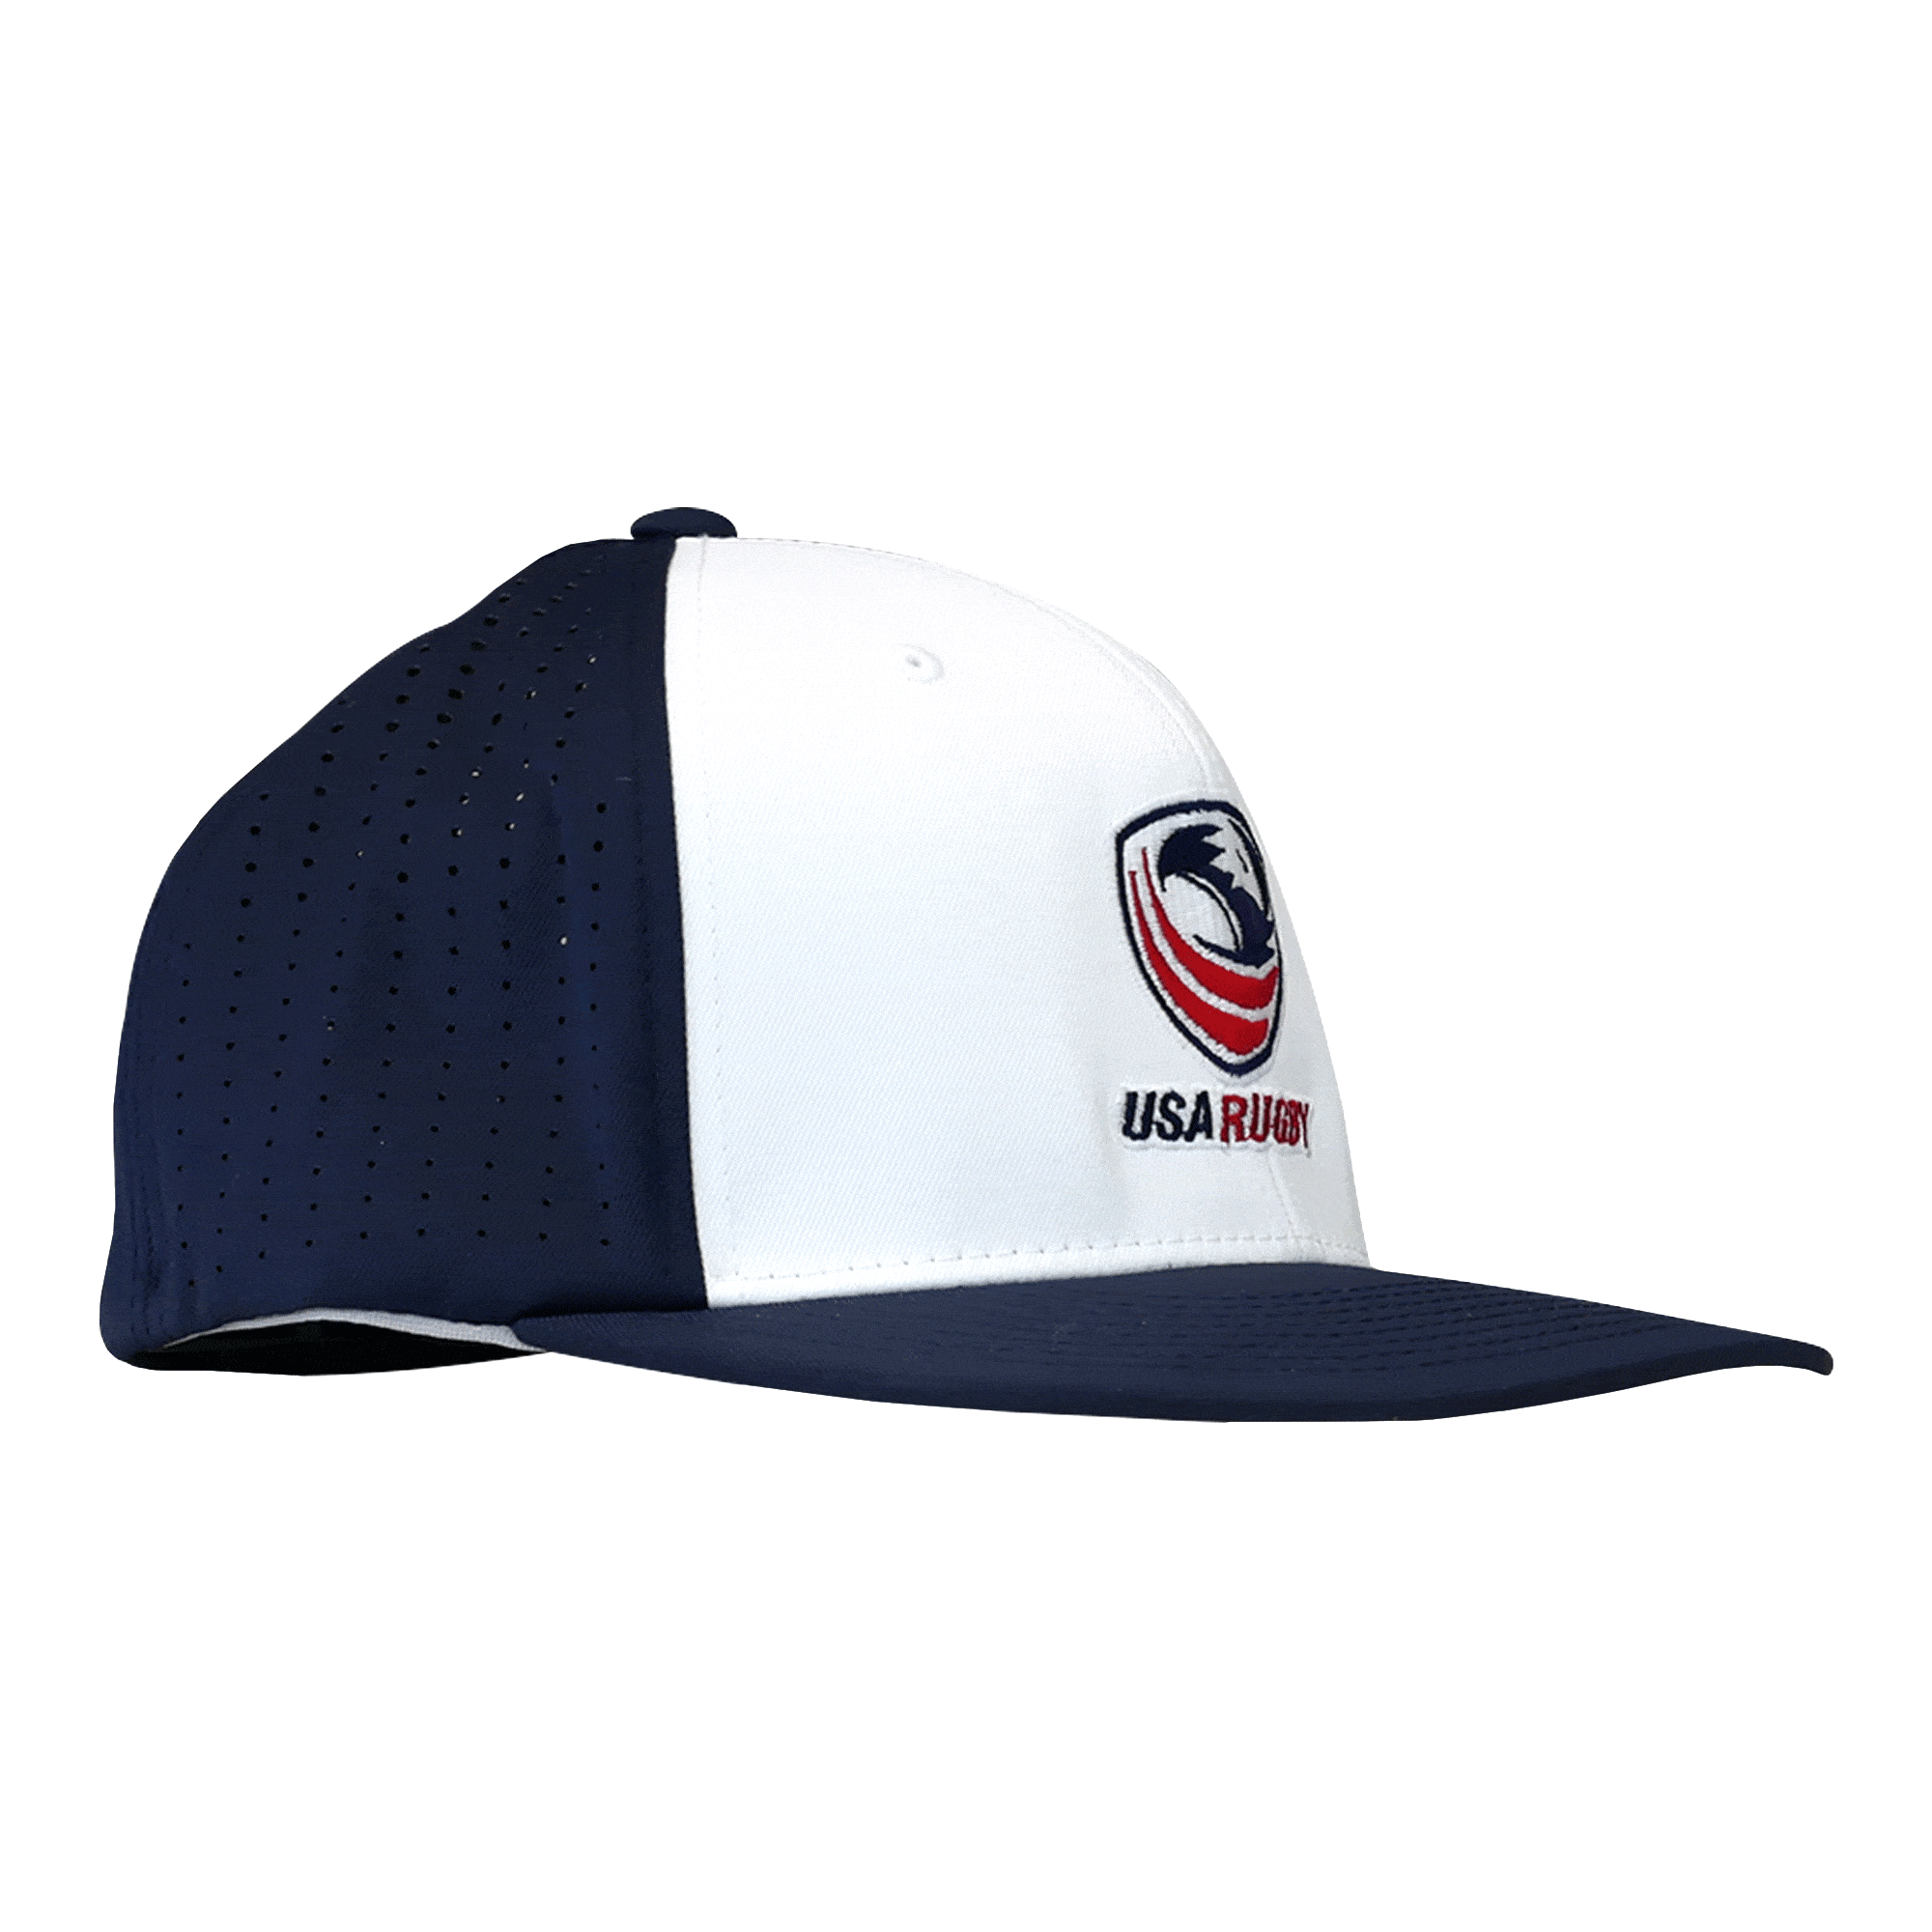 Puerto Rico World Baseball Classic Black Flexfit Hat L-XL 